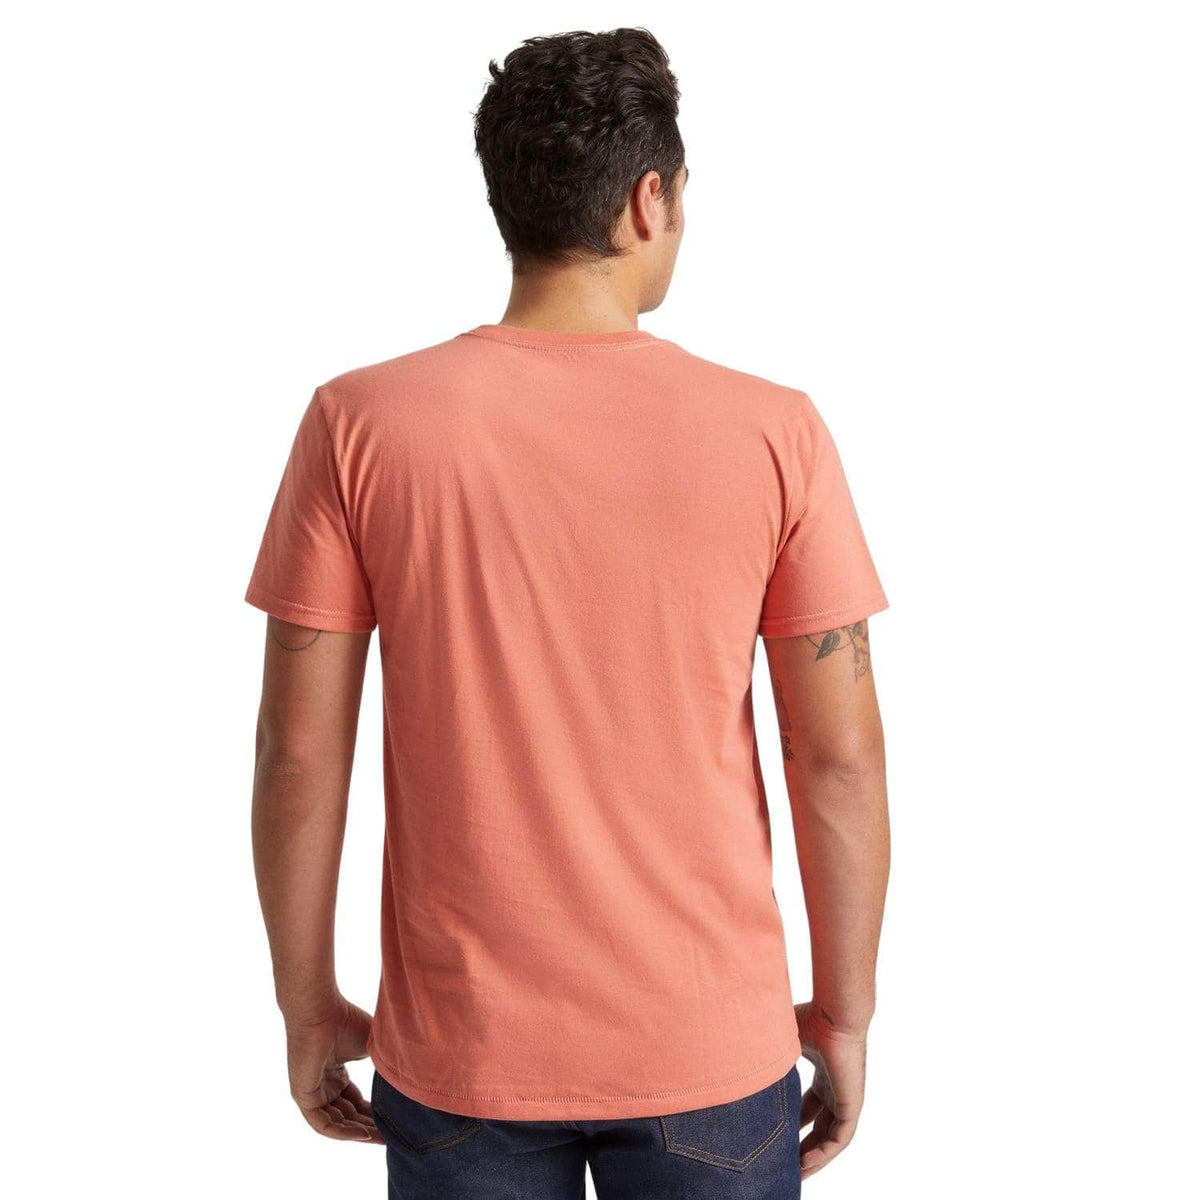 Brixton Basic Tailored T-Shirt - Apricot Jam - Mens Plain T-Shirt by Brixton